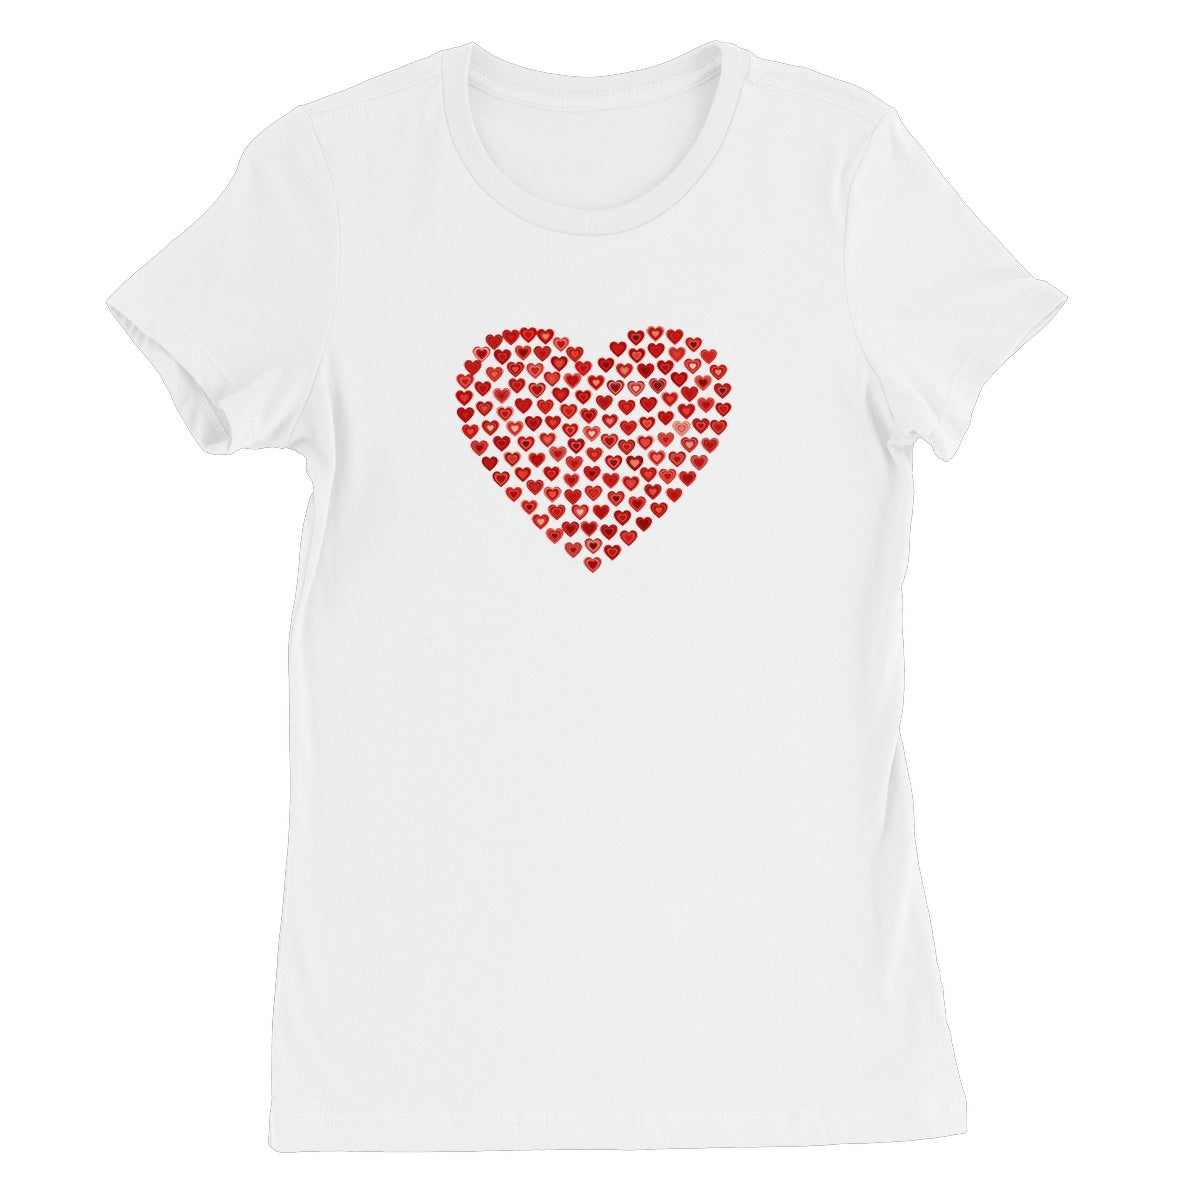 Heart of Hearts Women's T-Shirt